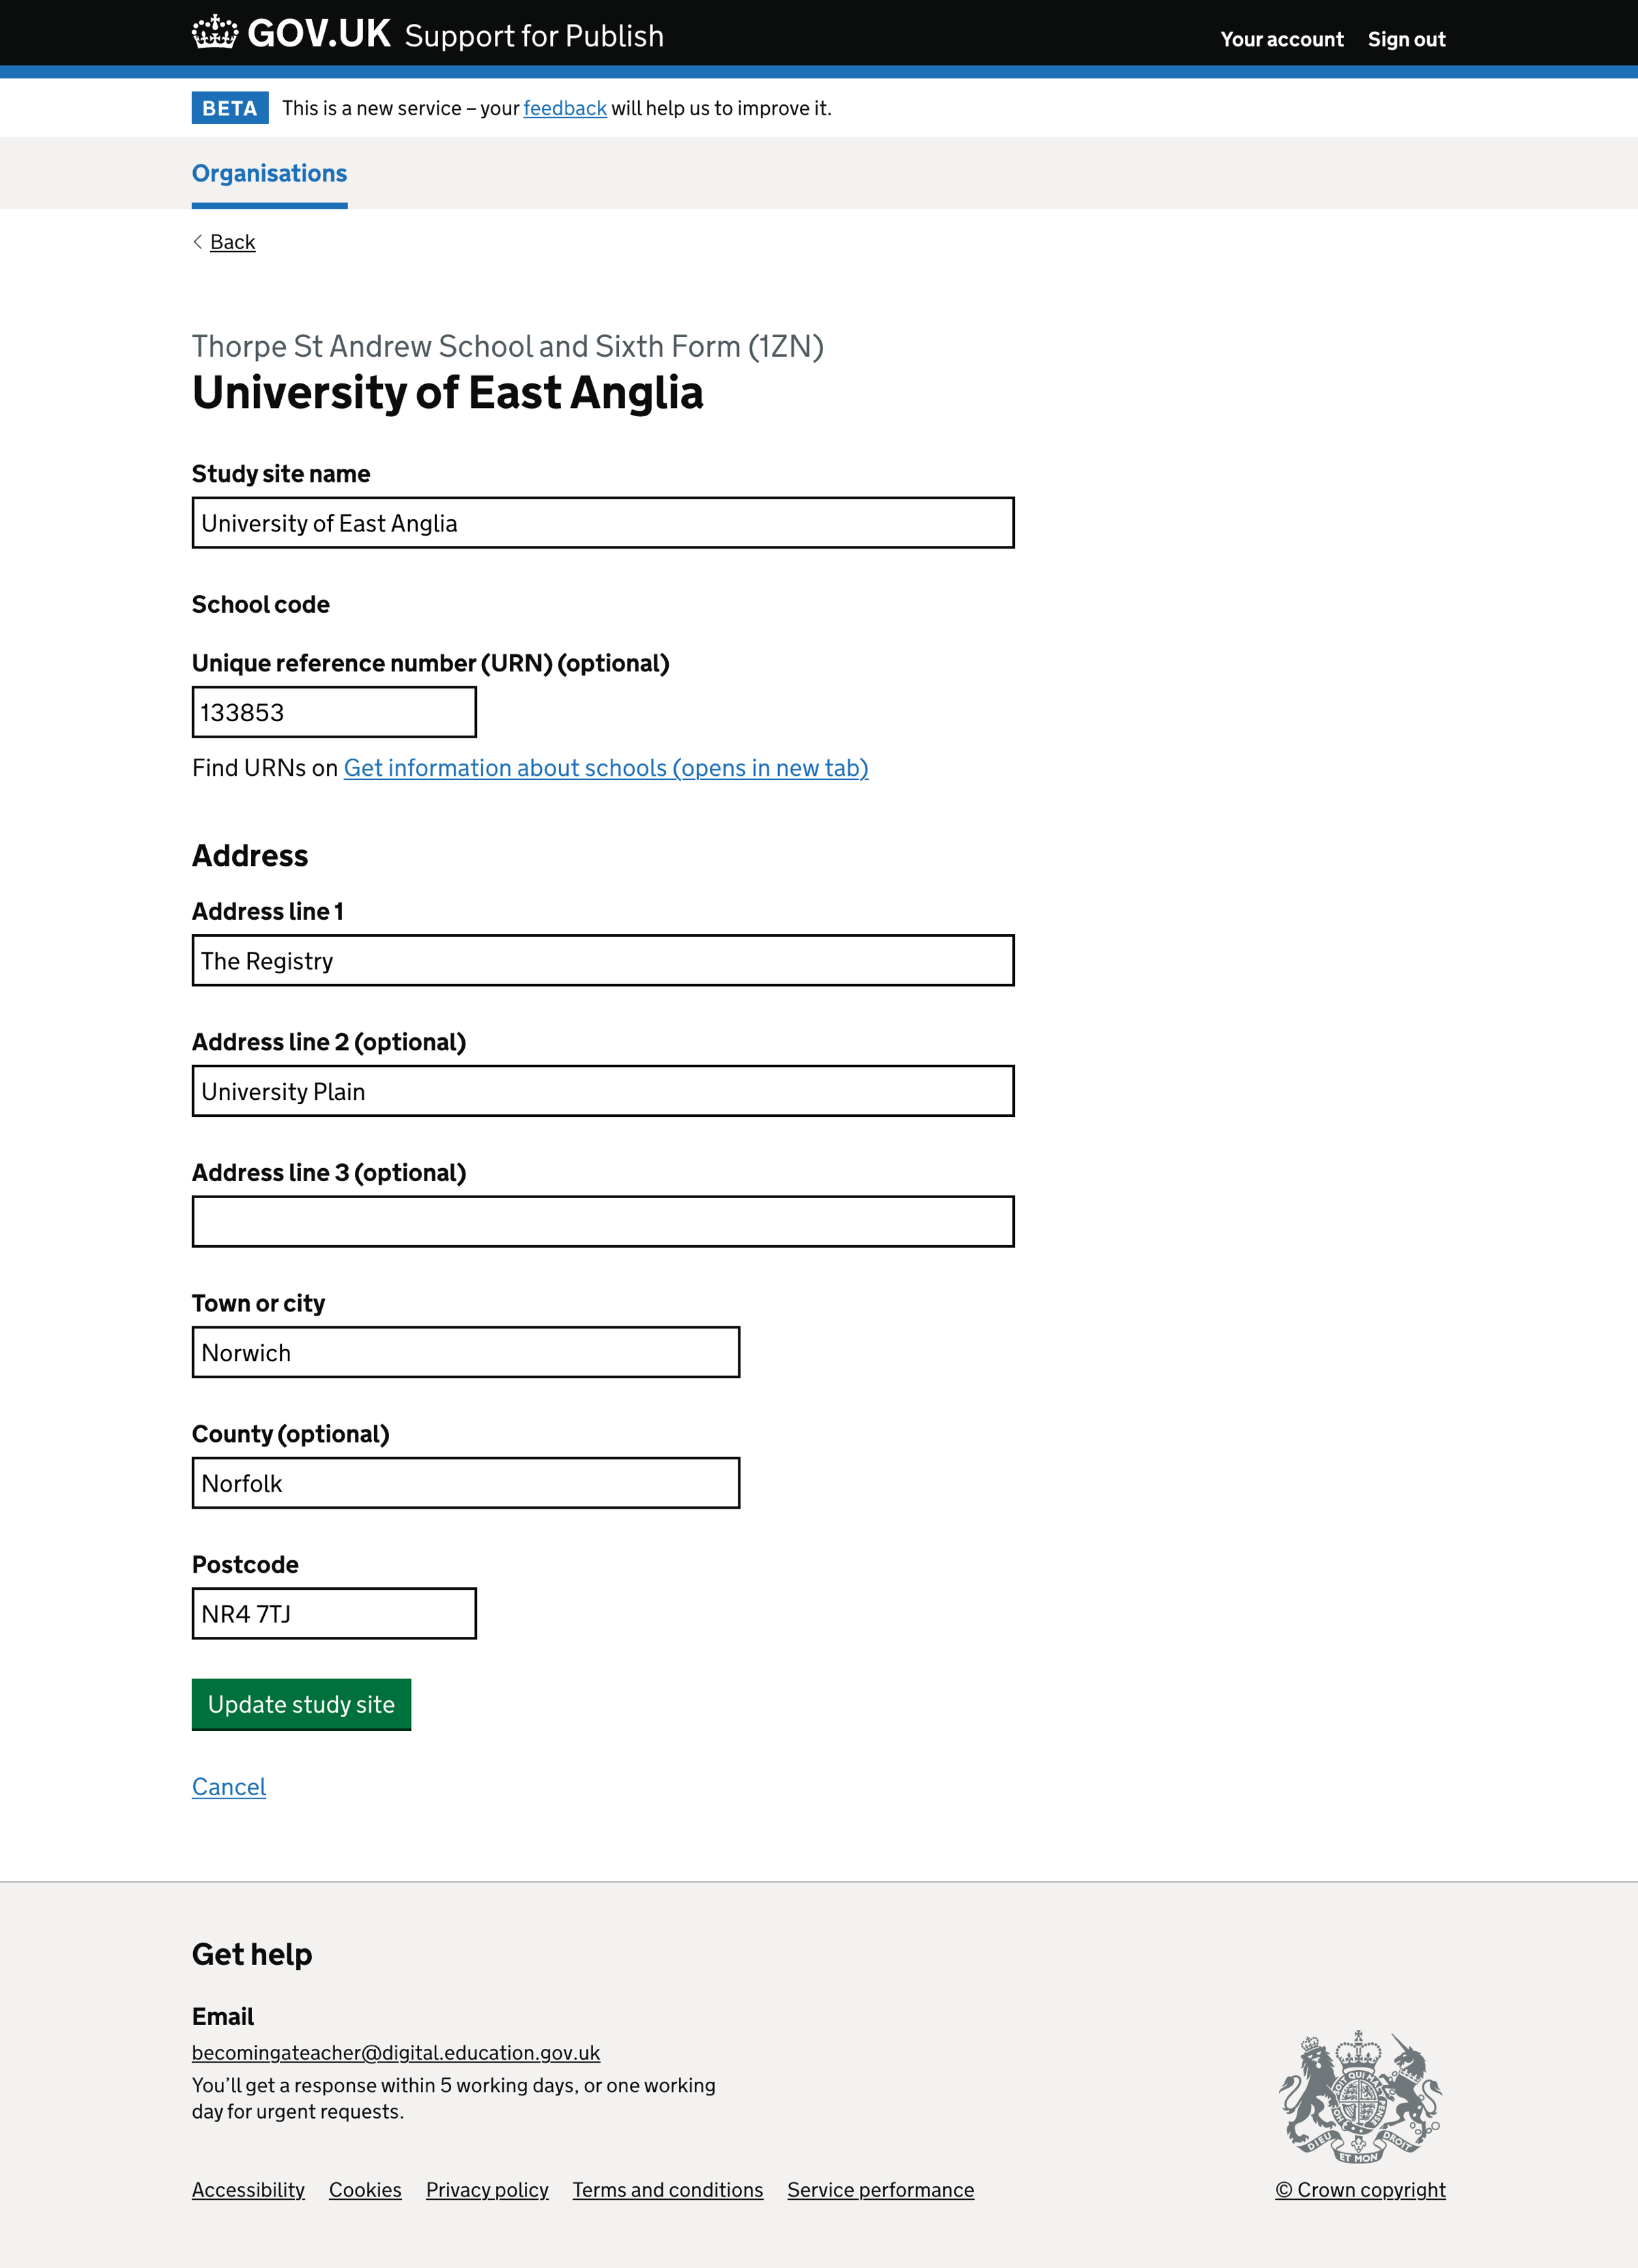 Screenshot of Adding a study site manually